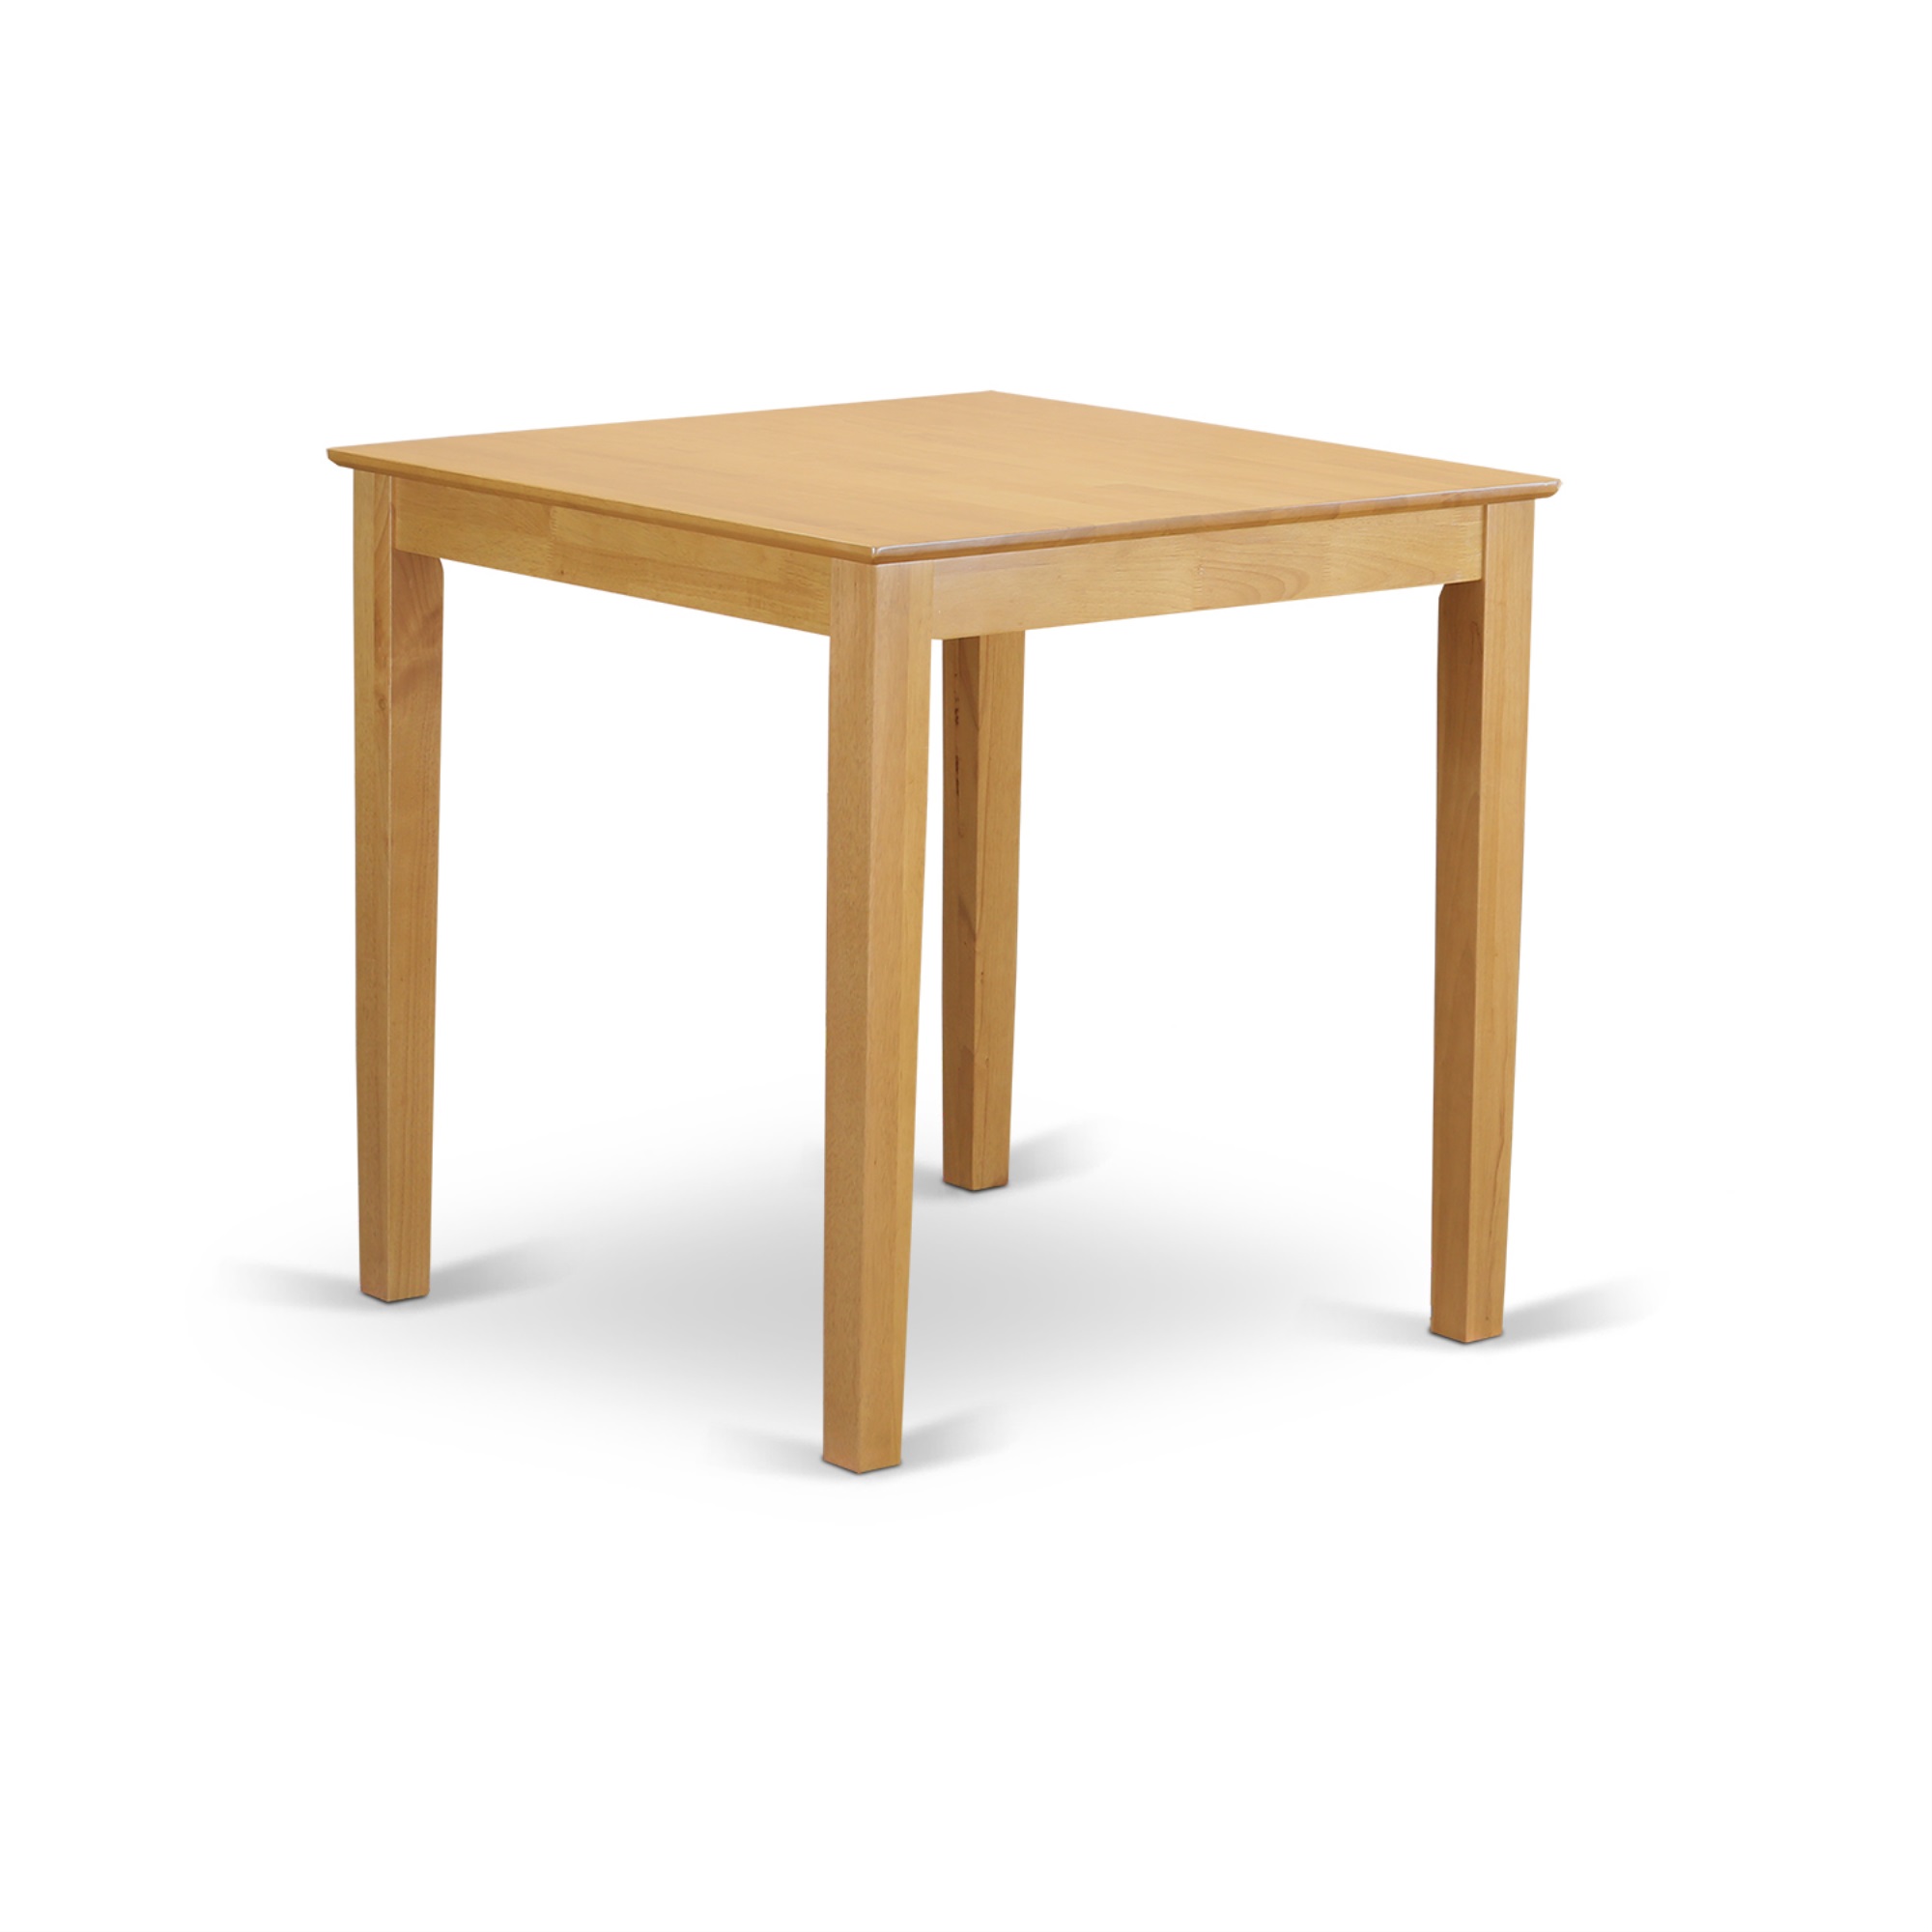 East West Furniture PBQU5-OAK-W 5 PC counter height Dining set - counter height Table and 4 counter height stool.